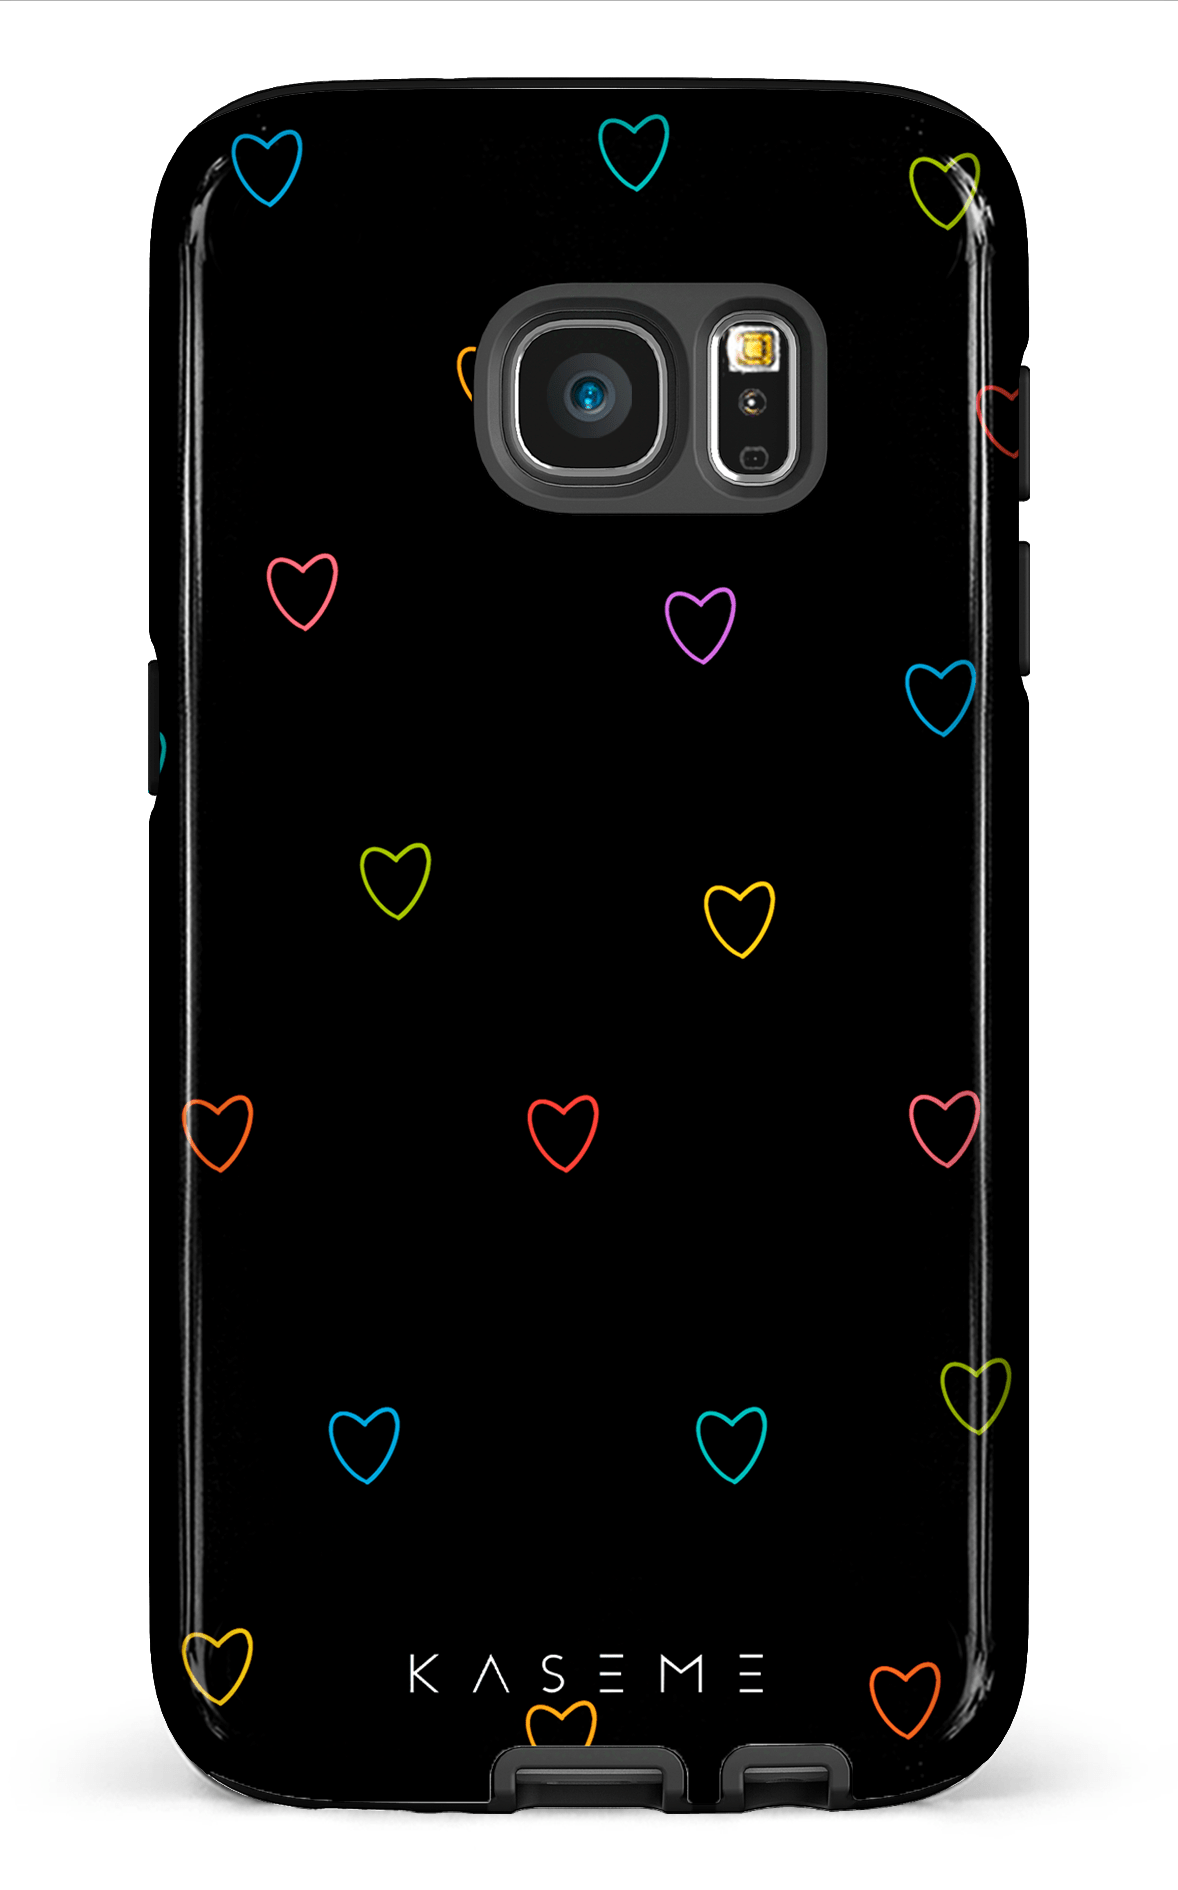 Love Wins - Galaxy S7